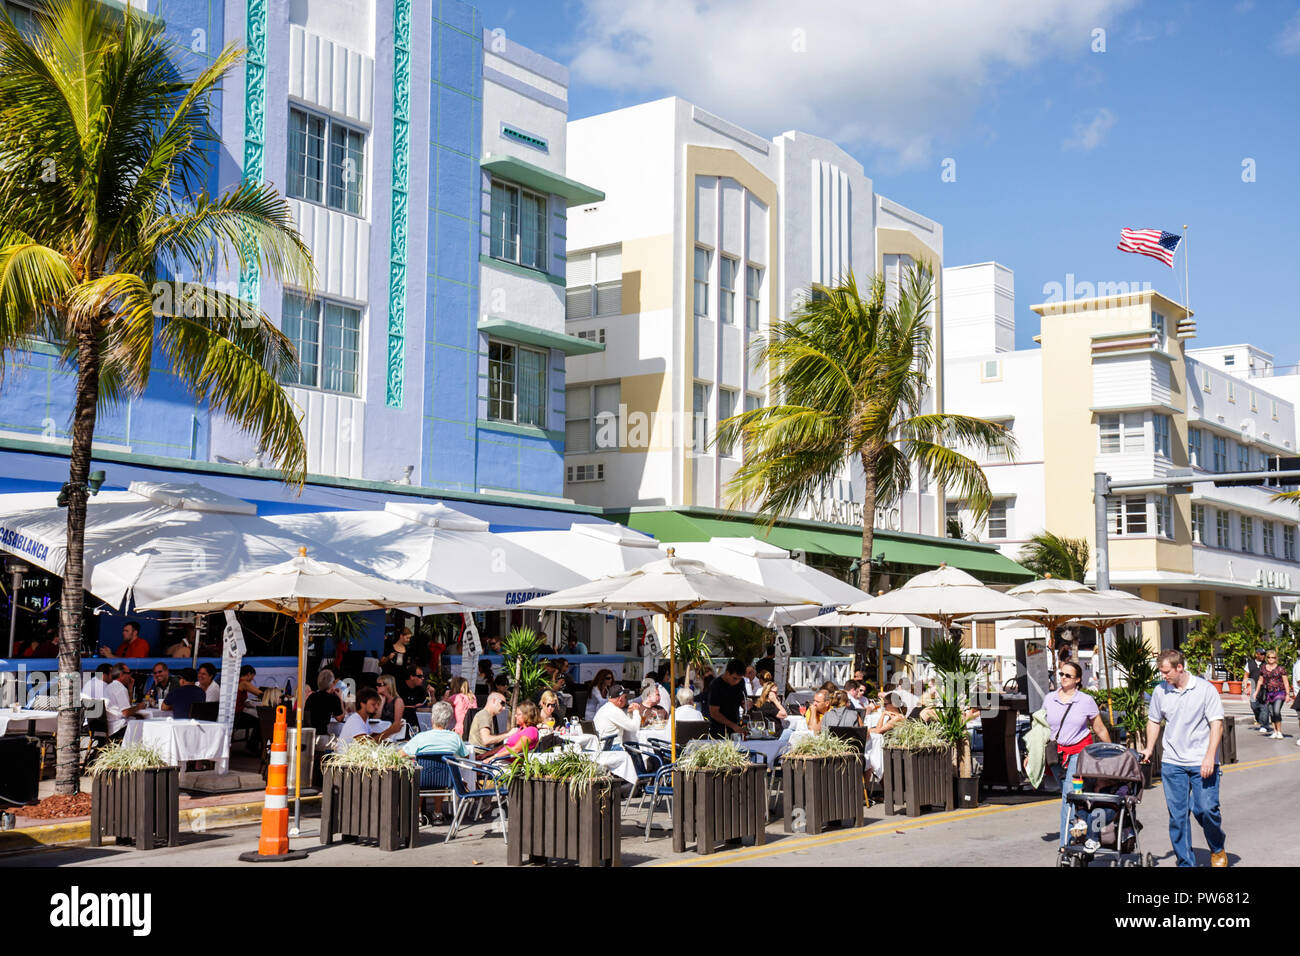 Miami Beach Florida,Ocean Drive,New Year's Day,Casablanca,hotel,street,sidewalk cafe,restaurant restaurants food dining cafe cafes,umbrellas,al fresco Stock Photo